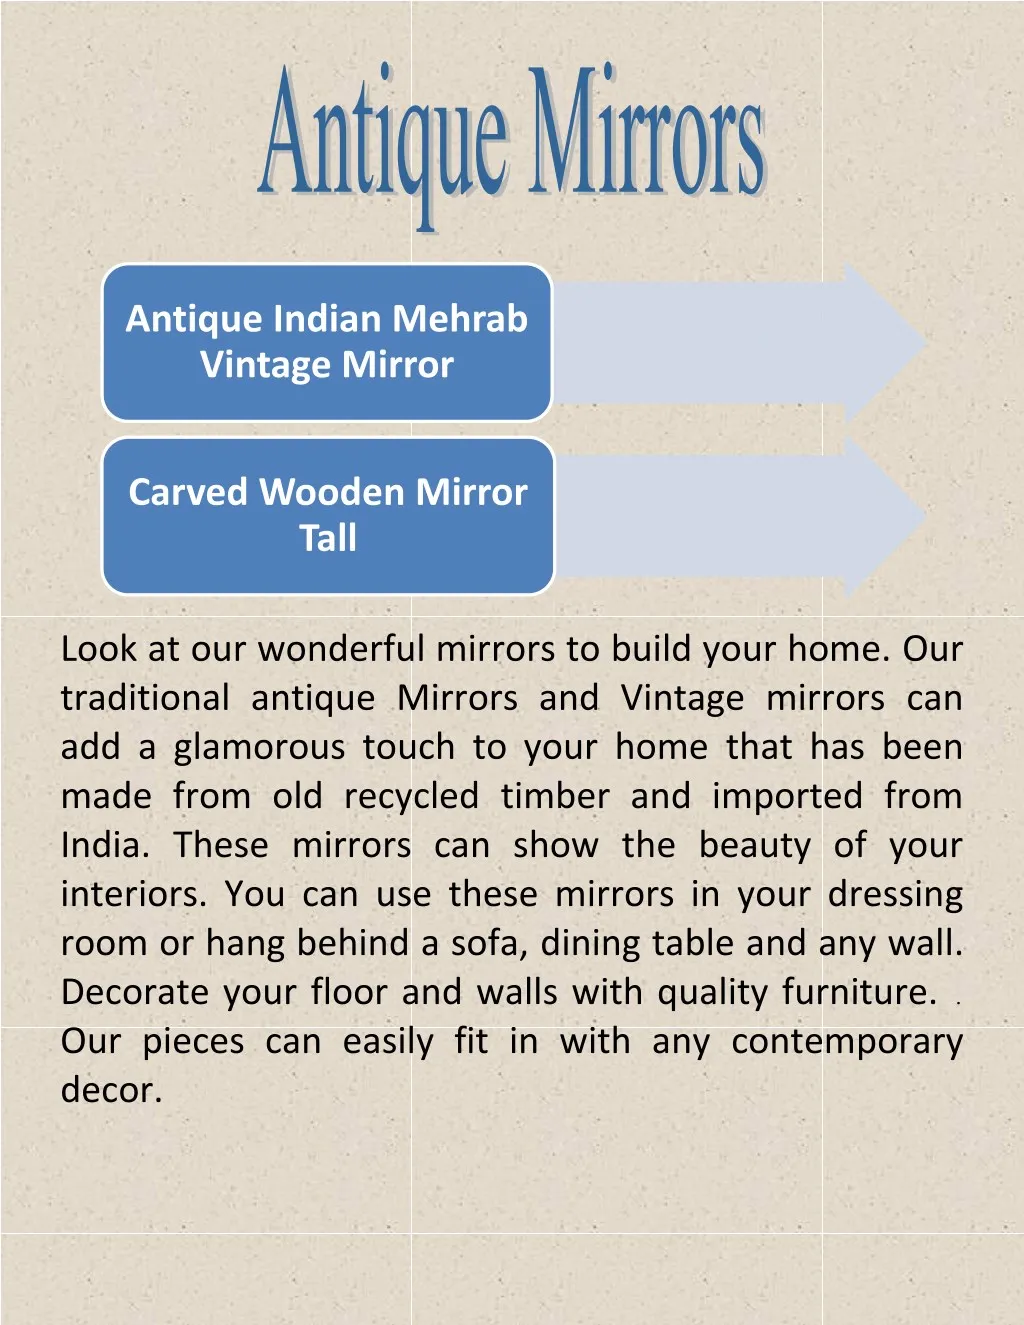 antique indian mehrab vintage mirror